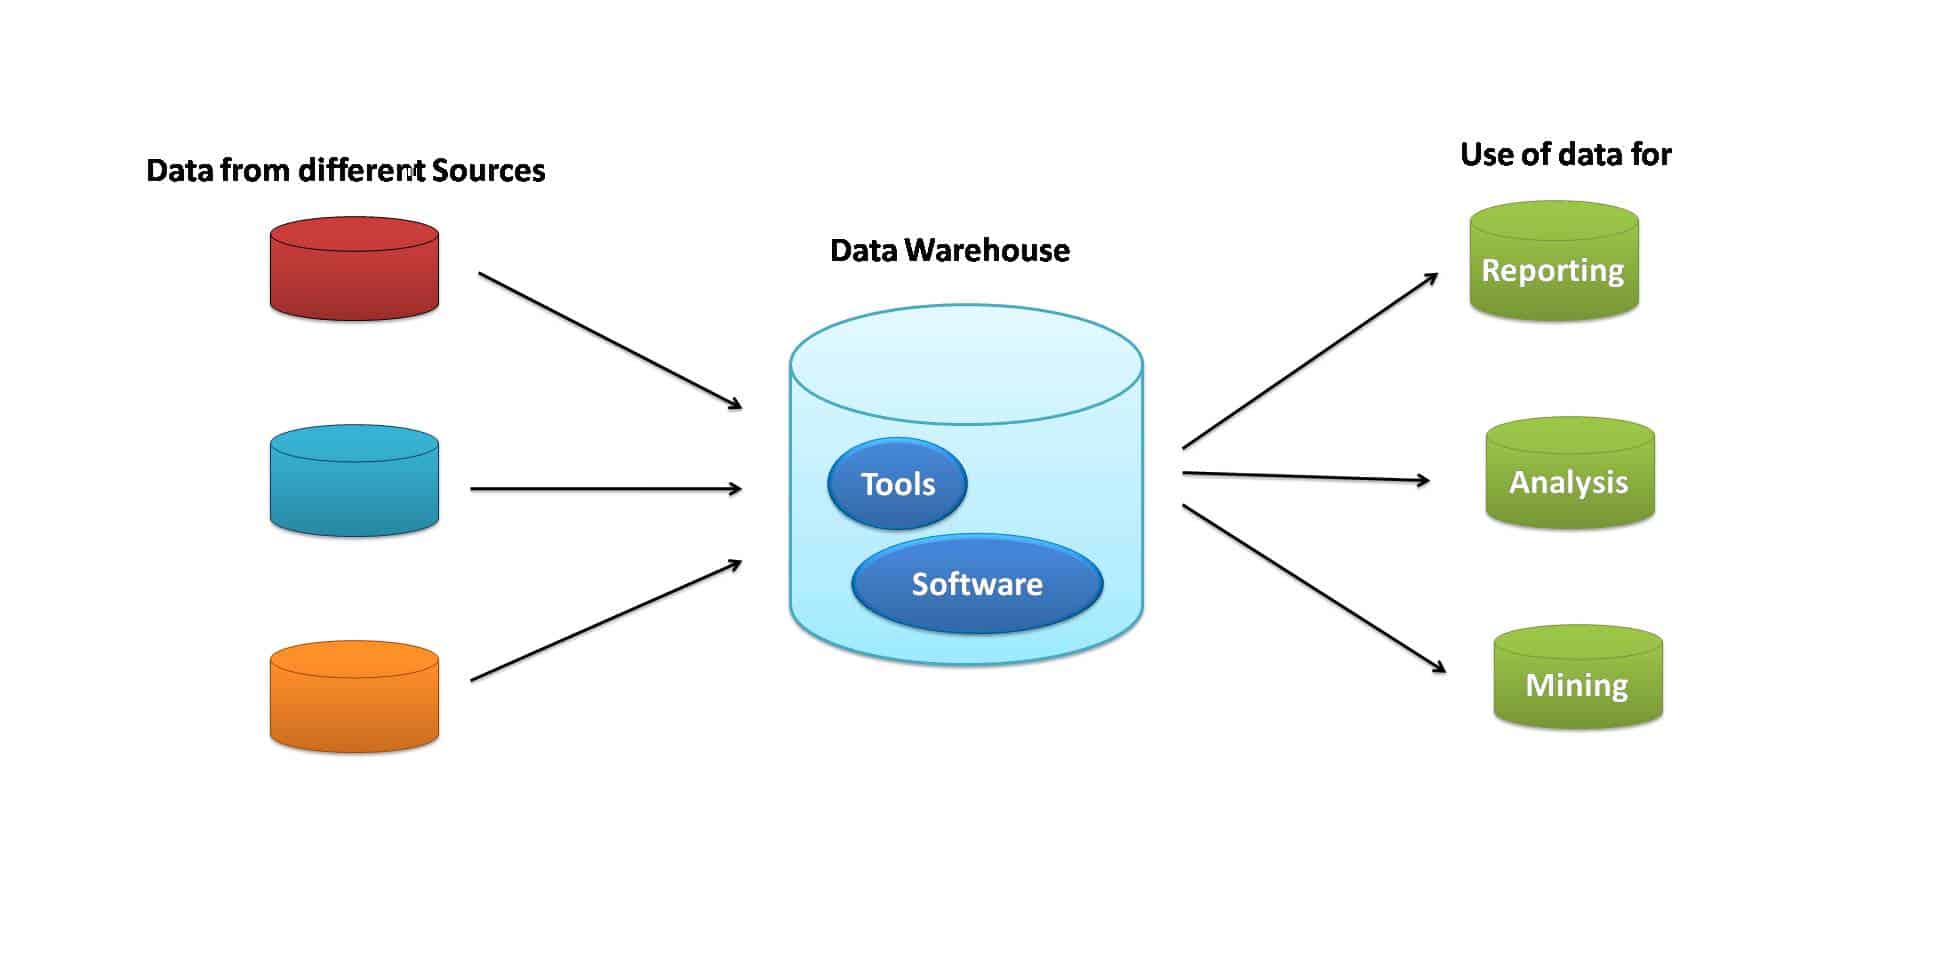 Datawarehouse